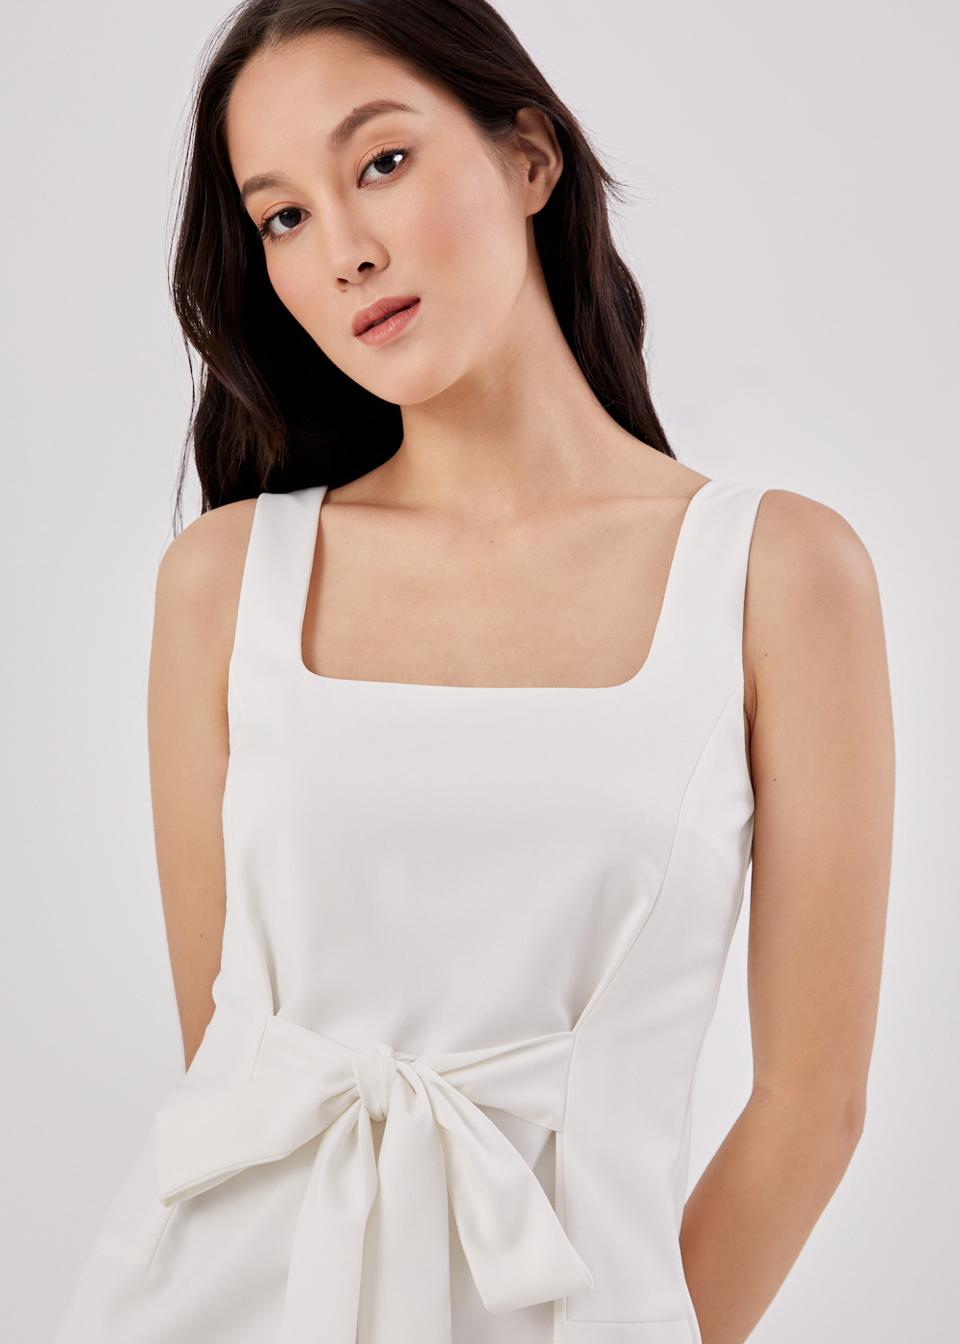 Buy Fosette Square Neck Shift Dress @ Love, Bonito Hong Kong | Shop ...